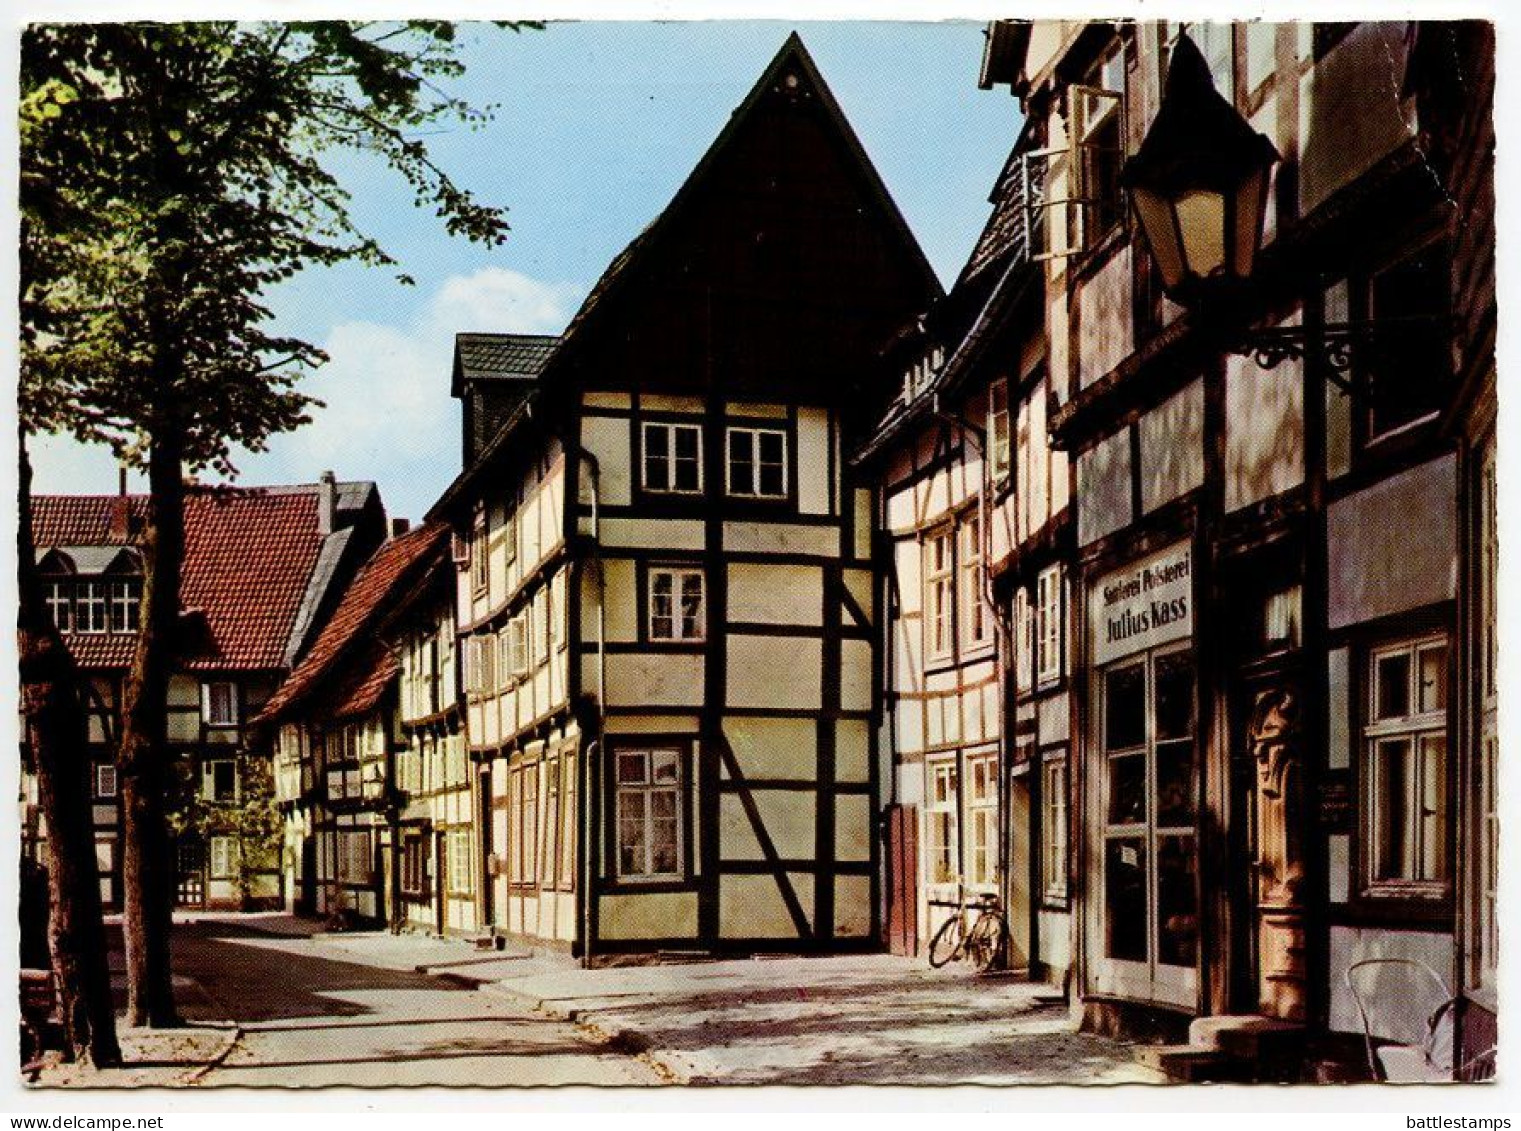 Germany, West 1977 Postcard Gütersloh - Am Alten Kirchplatz; Slogan Cancel; 40pf. Space Shuttle Stamp - Gütersloh